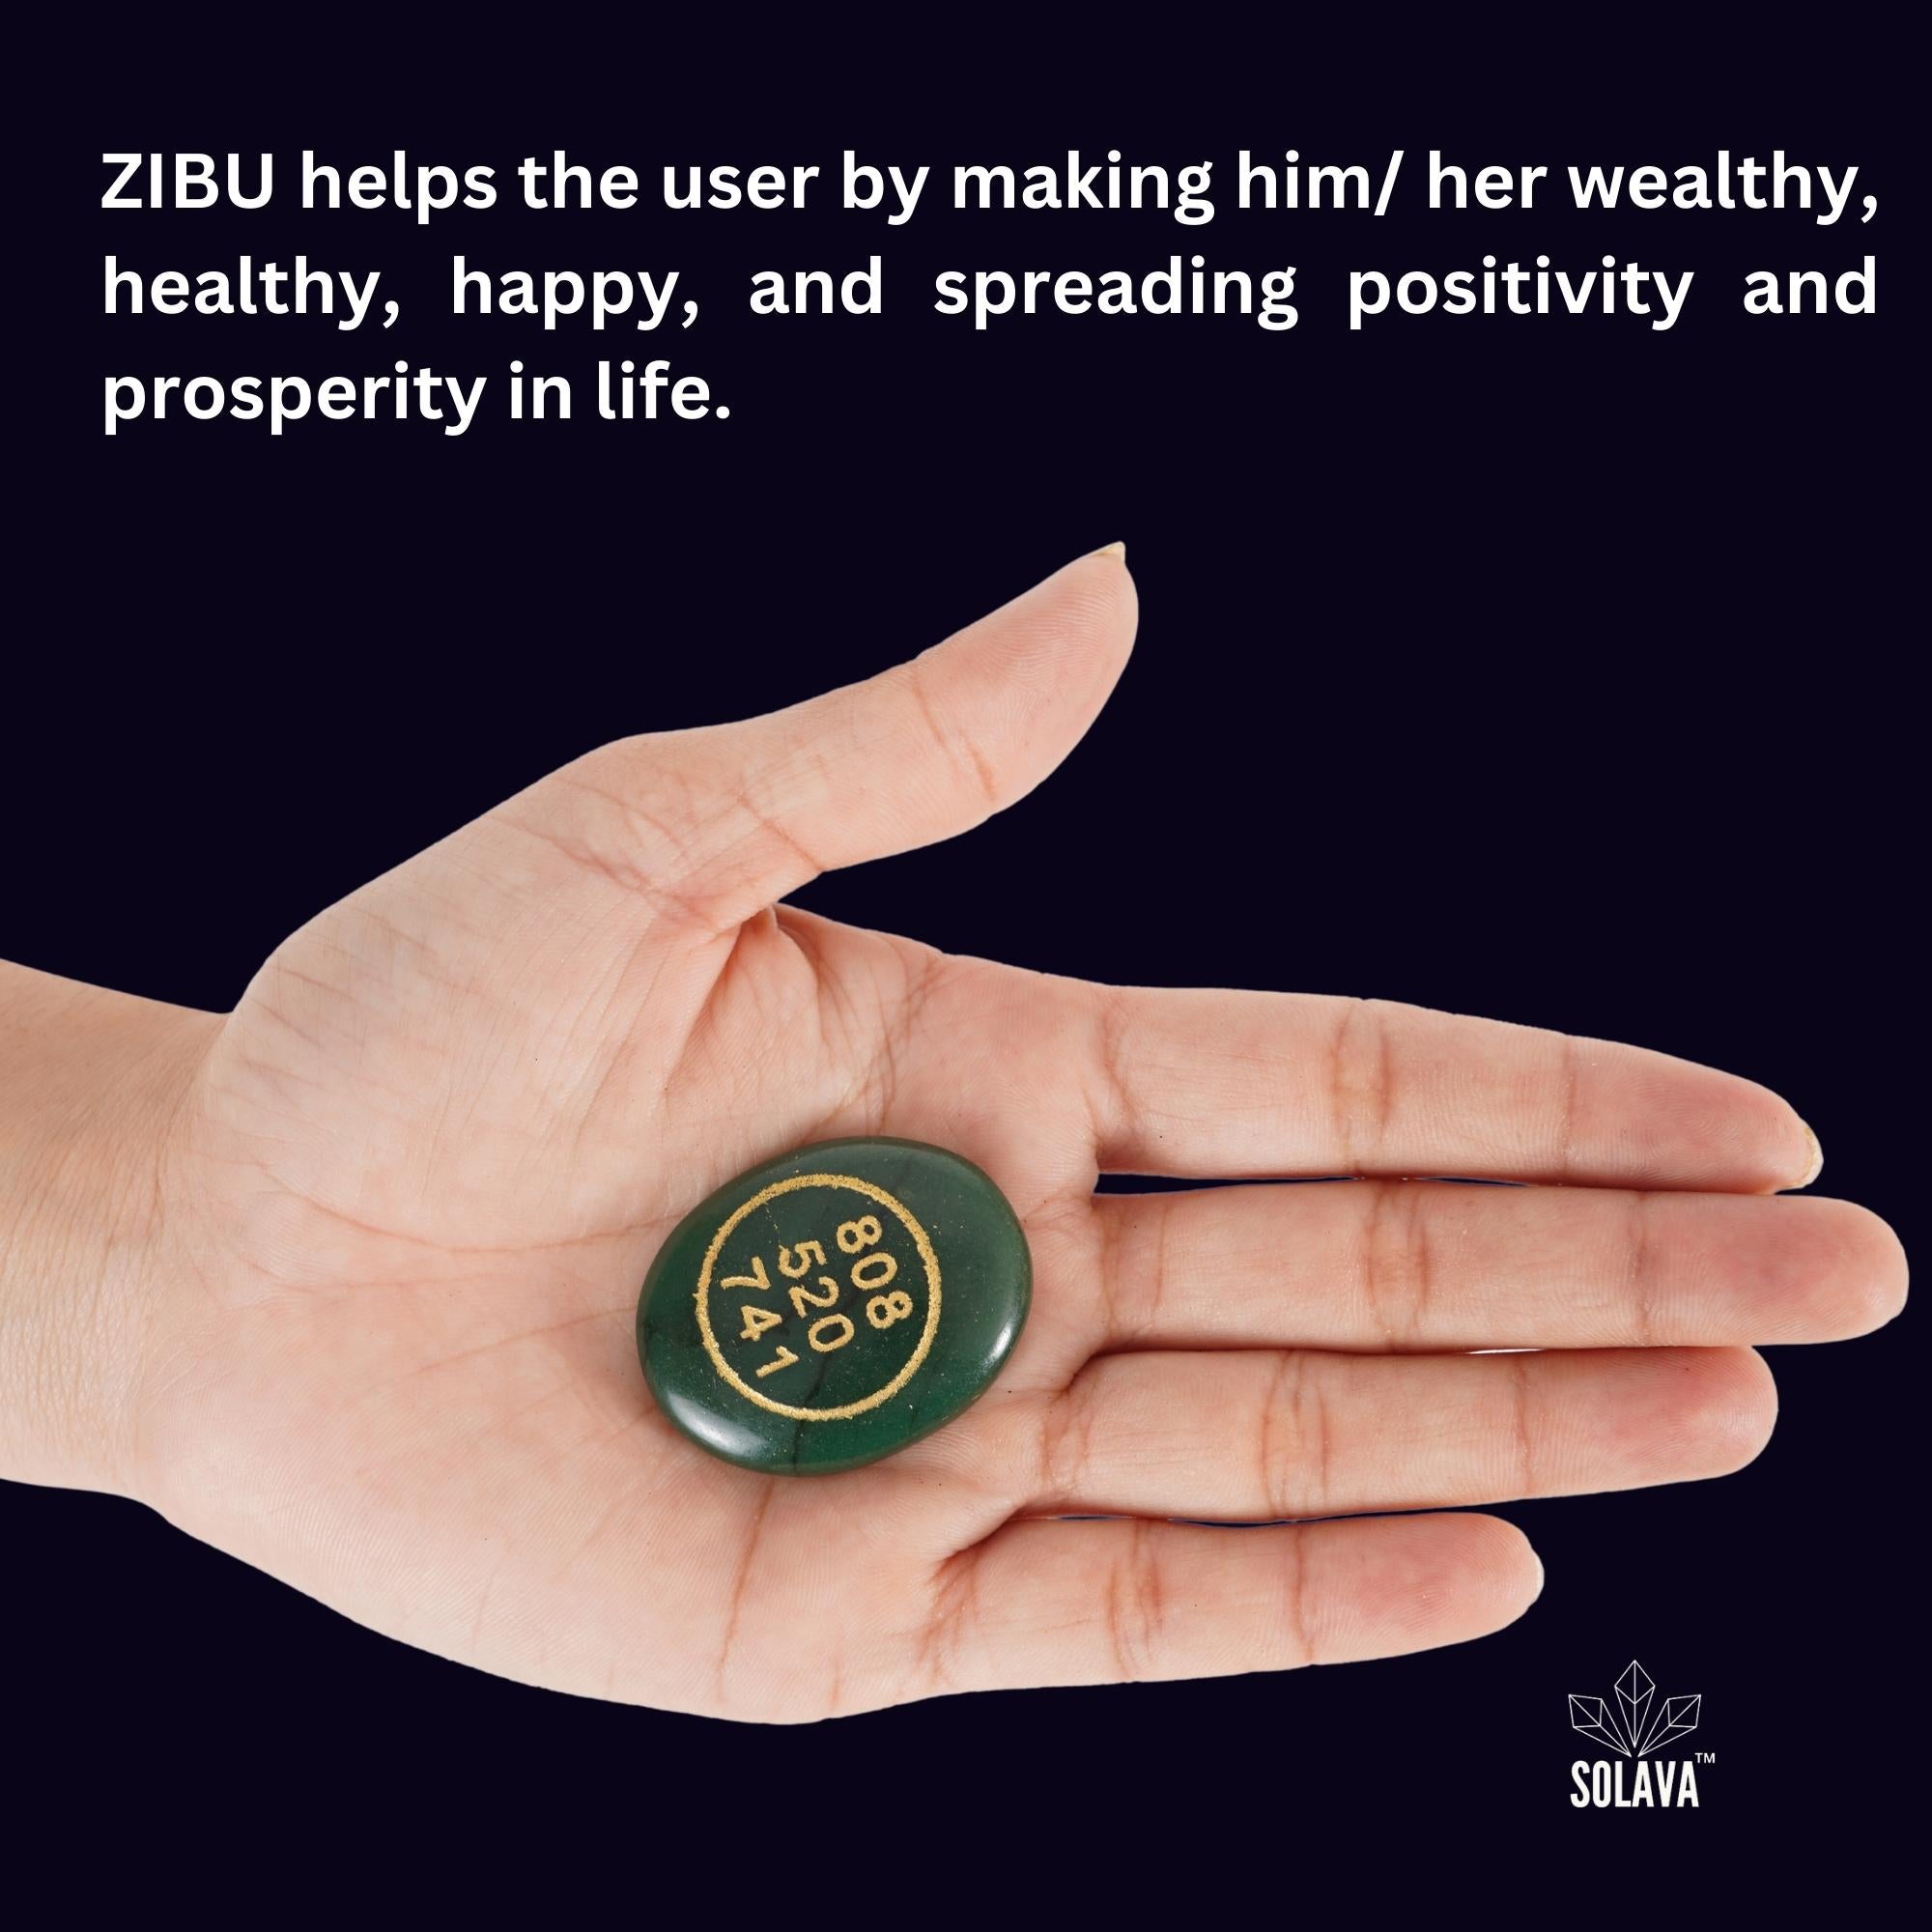 Zibu Coin Original Green Jade Crystal Stone